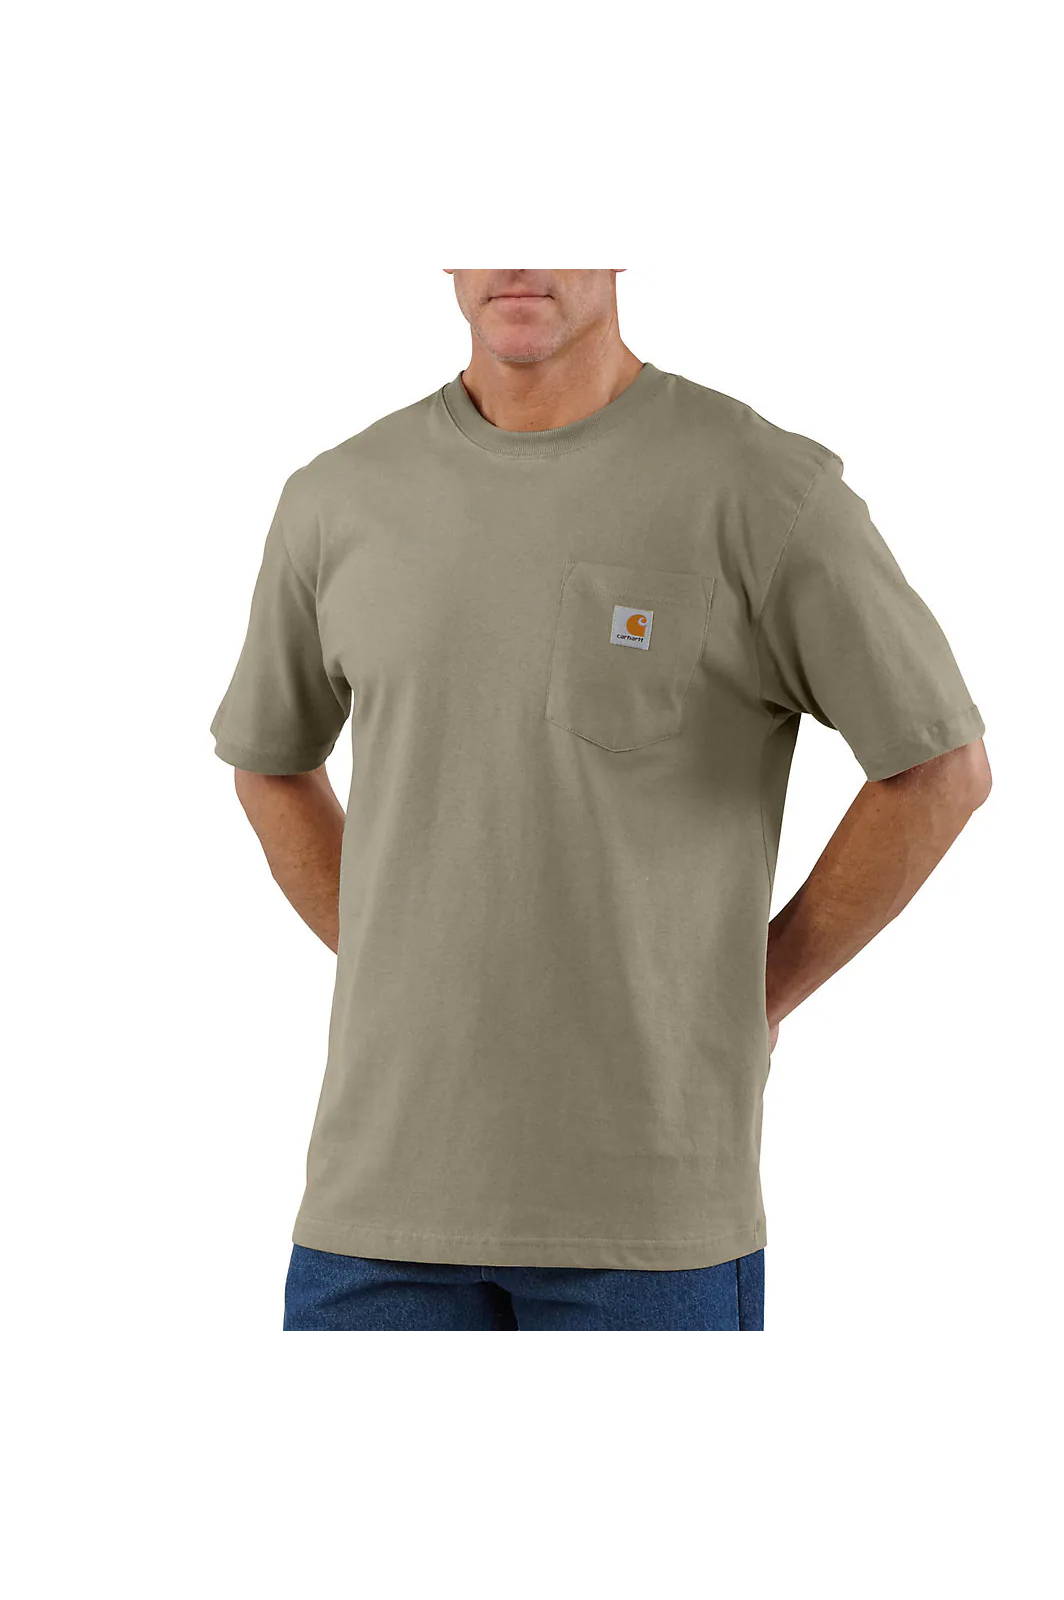 Carhartt BIG/TALL loose fit heavyweight short sleeve pocket t-shirt